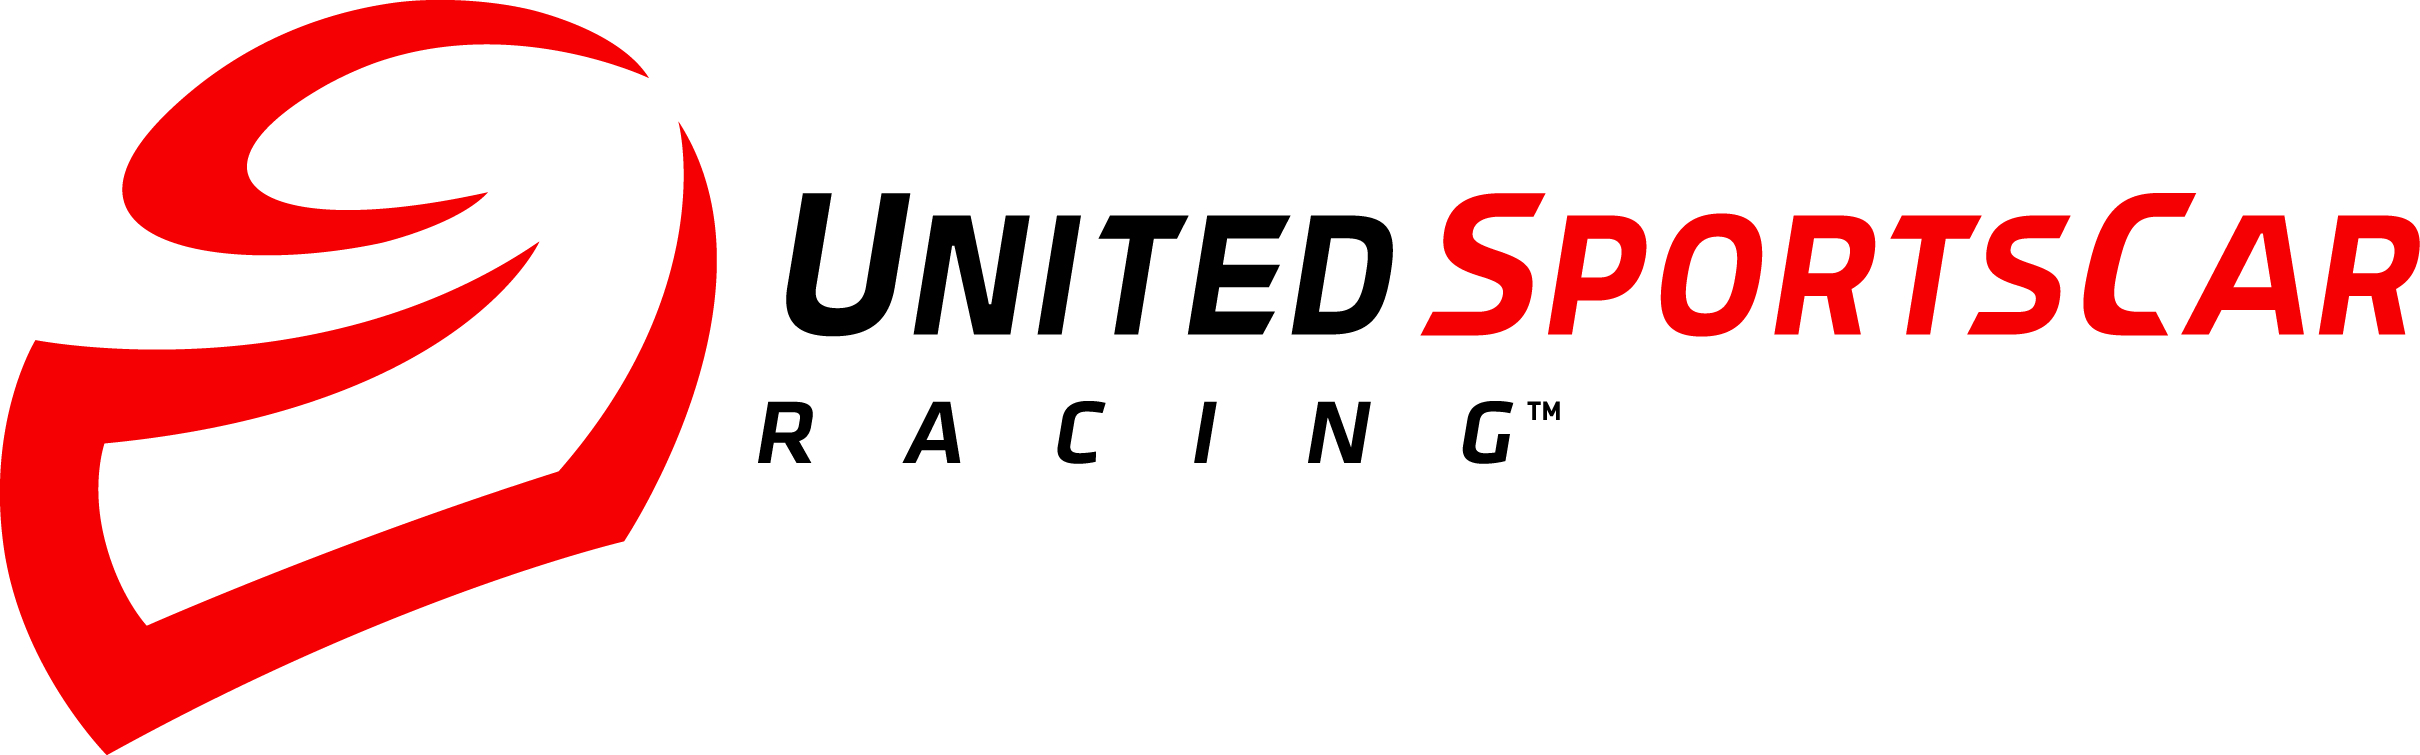 United-SportsCar-Racing-Horizontal.jpg